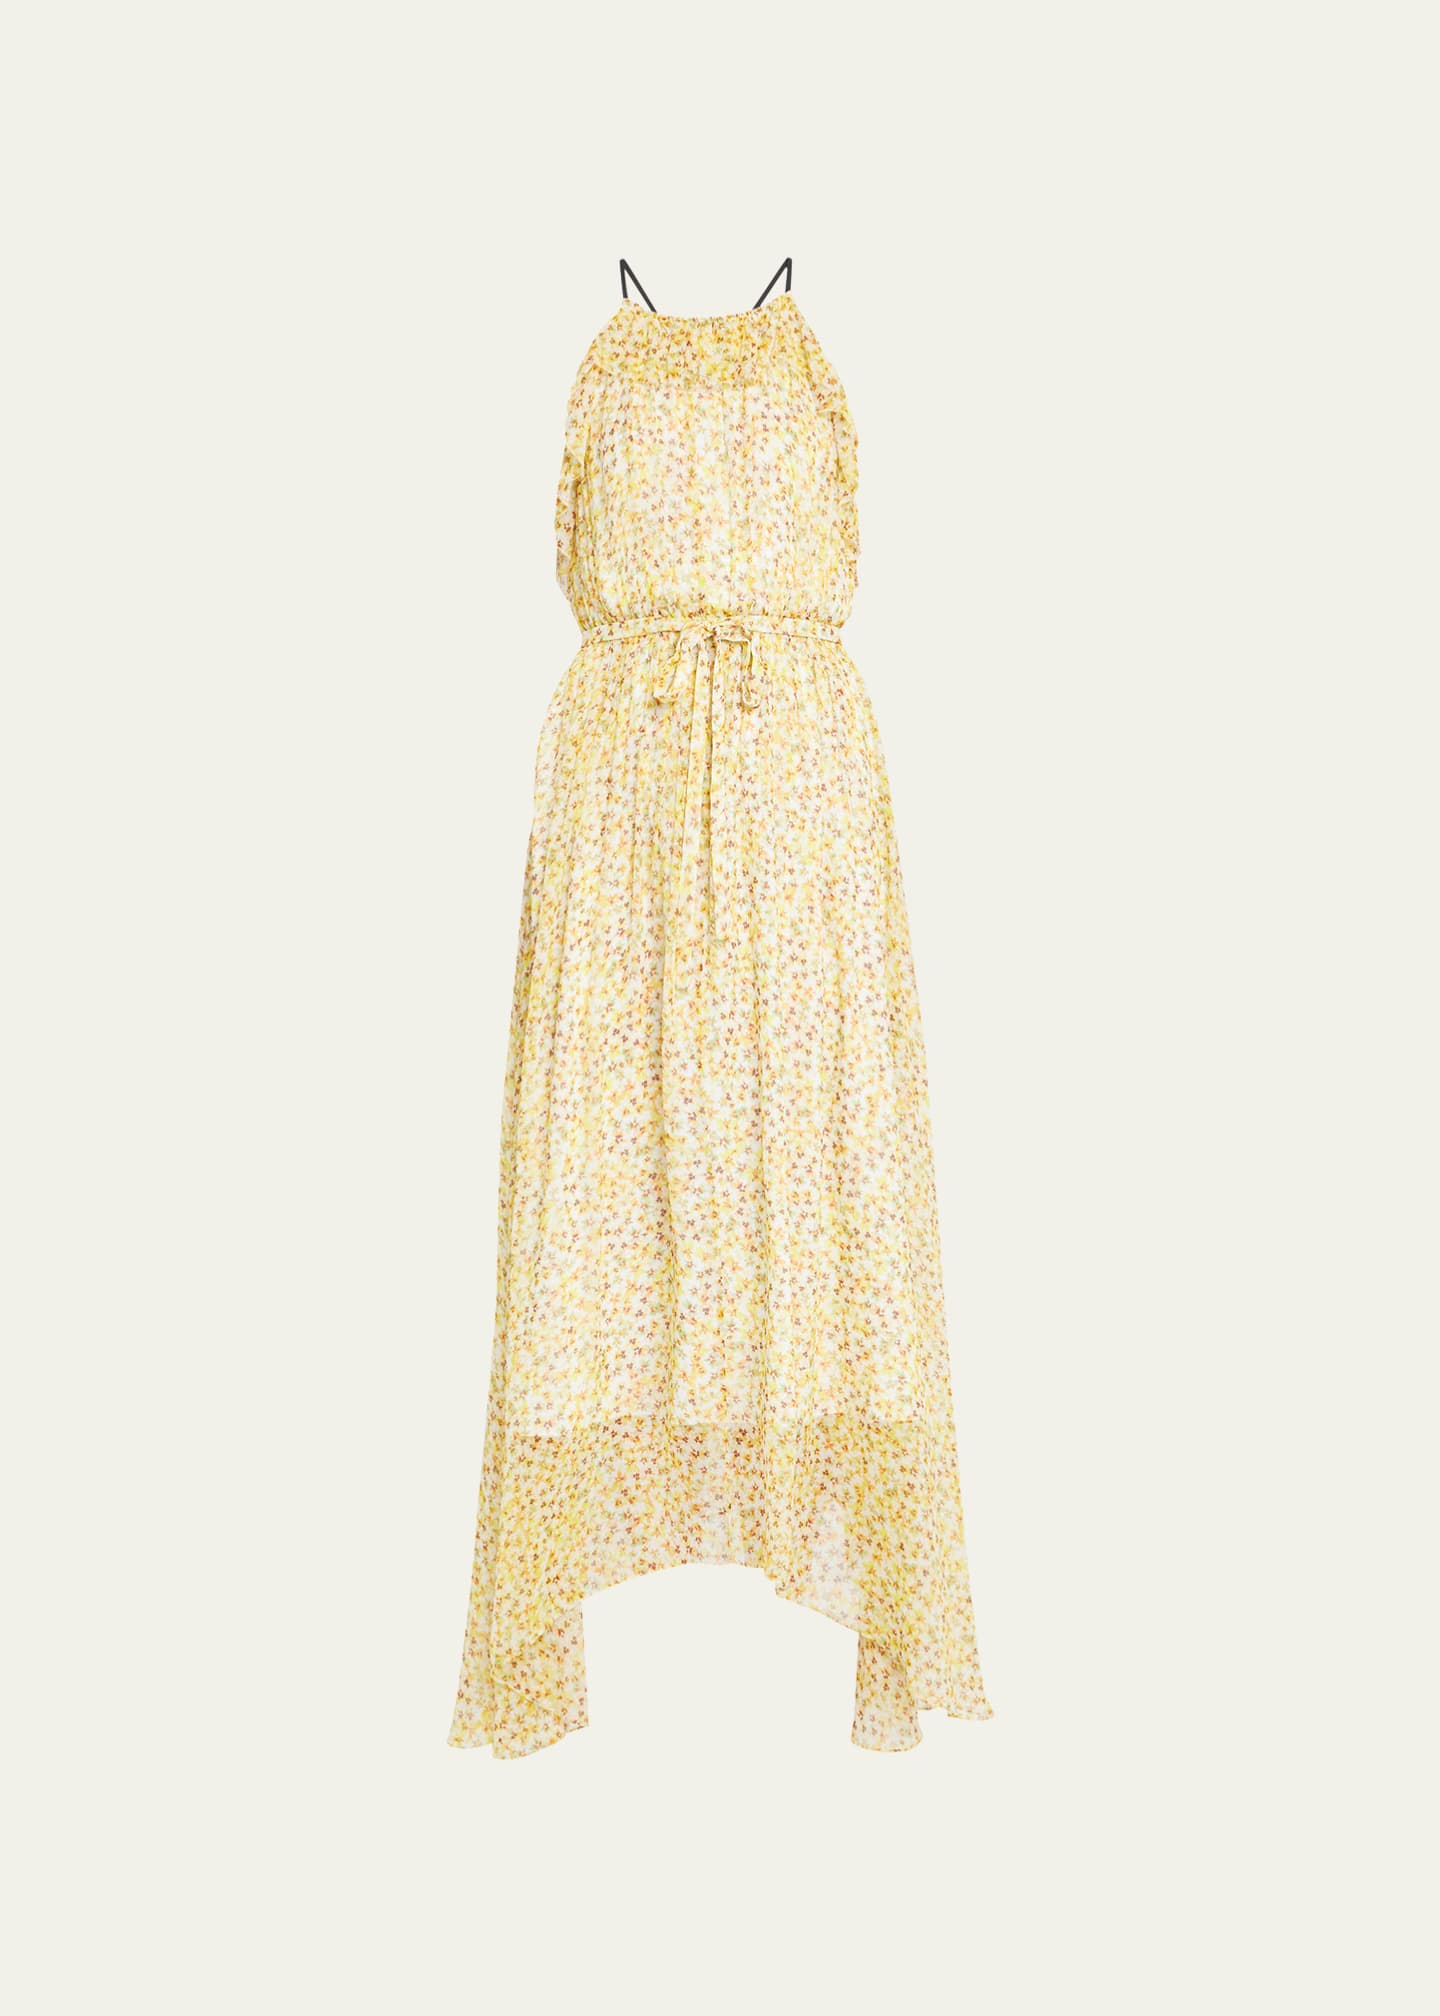 Jason Wu Crinkled Floral-Print Chiffon Halter Dress - Bergdorf Goodman